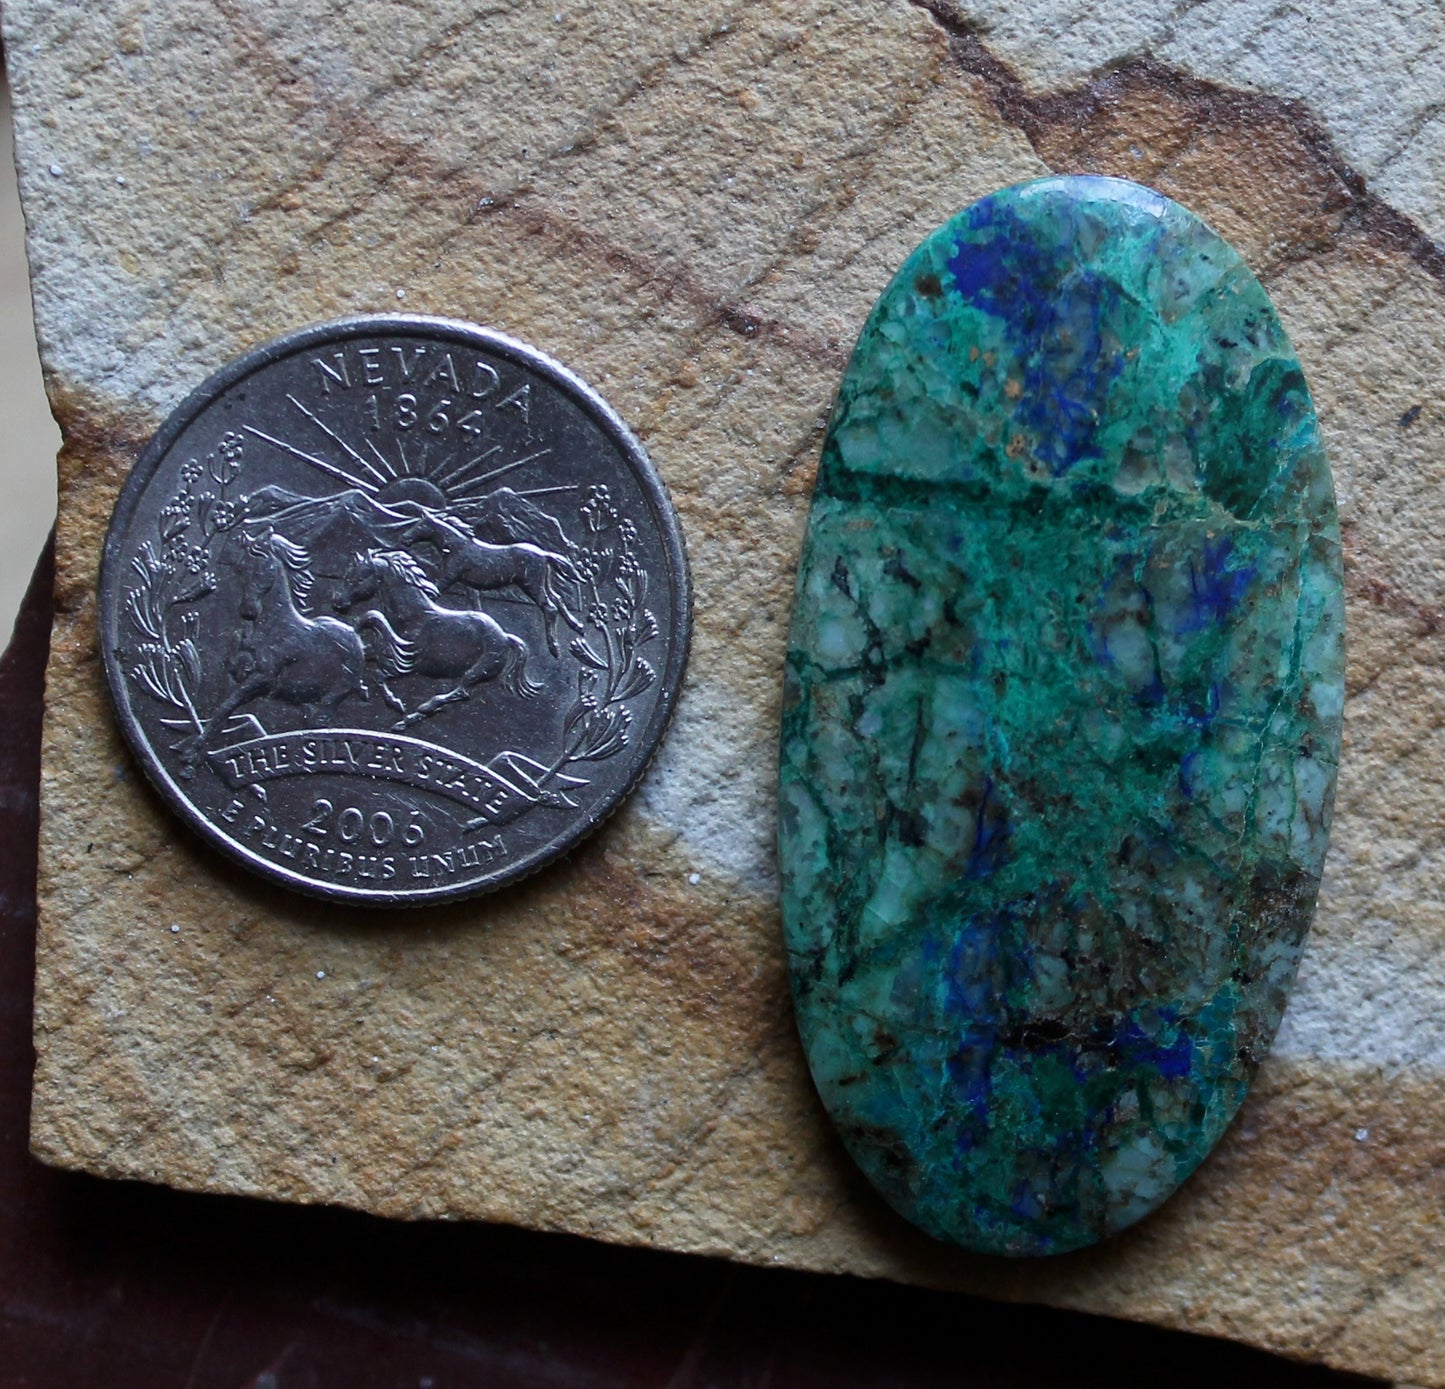 43 carat malachite, chrysocolla and azurite cabochon from near Yerington NV